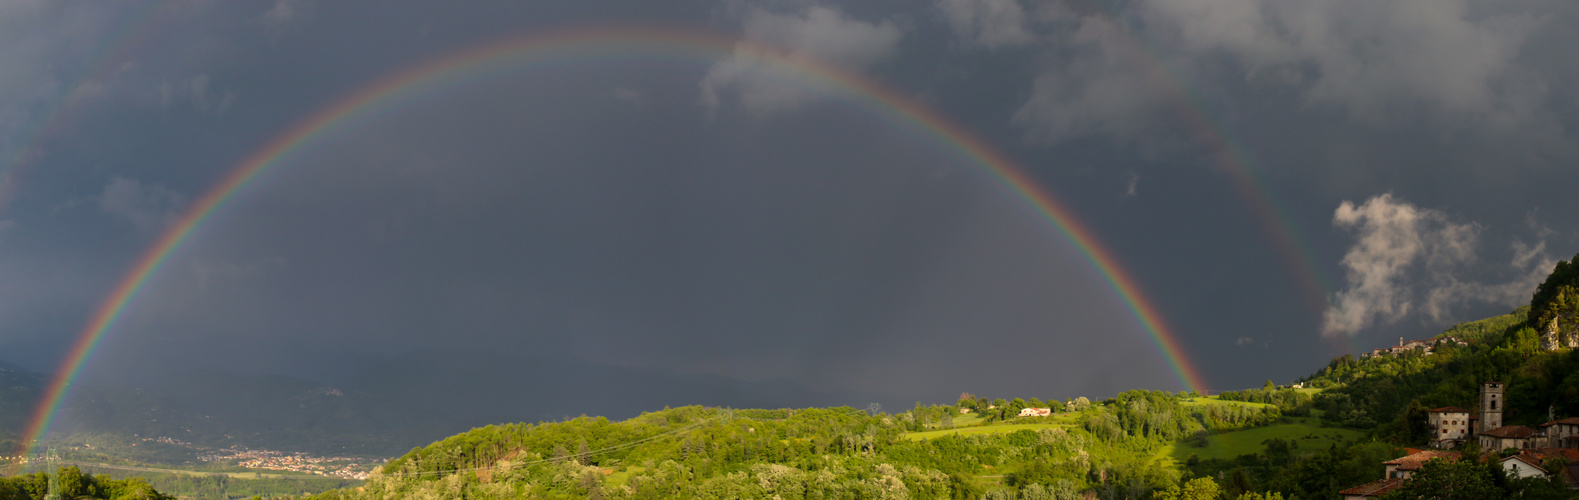 Regenbogen in der Toskana (Sillicano)